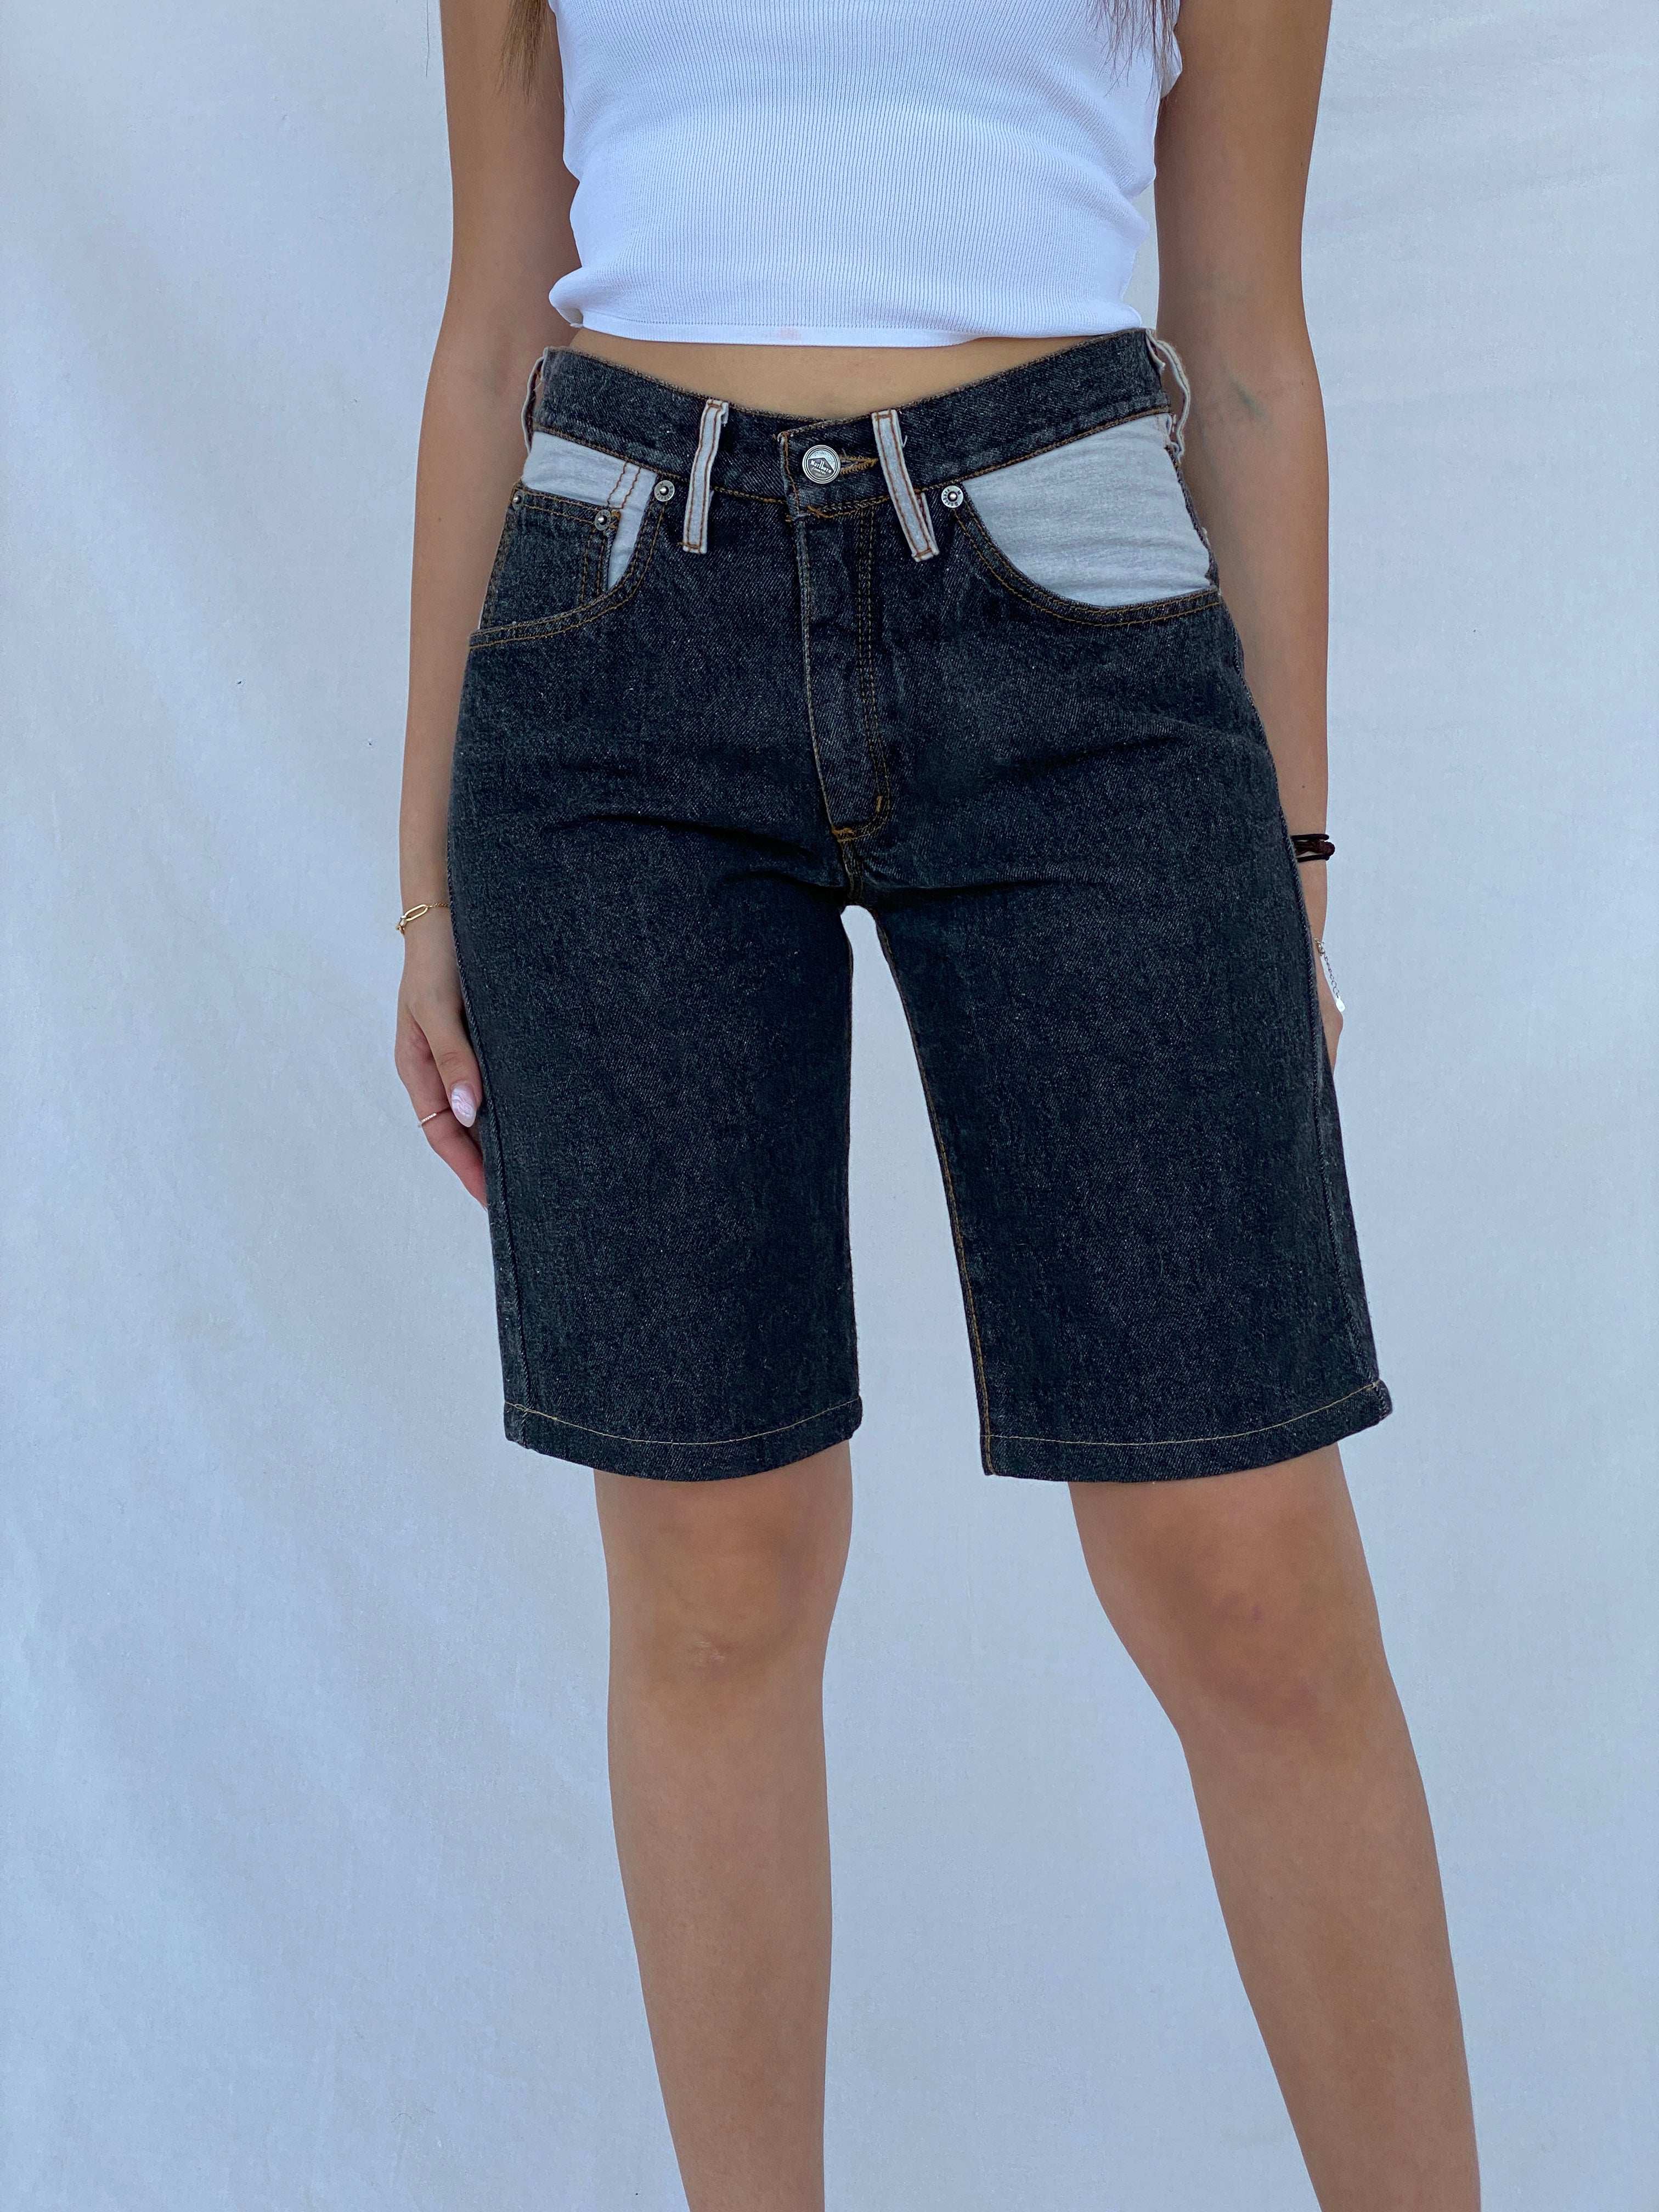 Vintage 90s Marlboro Jeans Reworked Jorts - Balagan Vintage Shorts 90s, Juana, Marlboro classics, NEW IN, shorts, vintage shorts